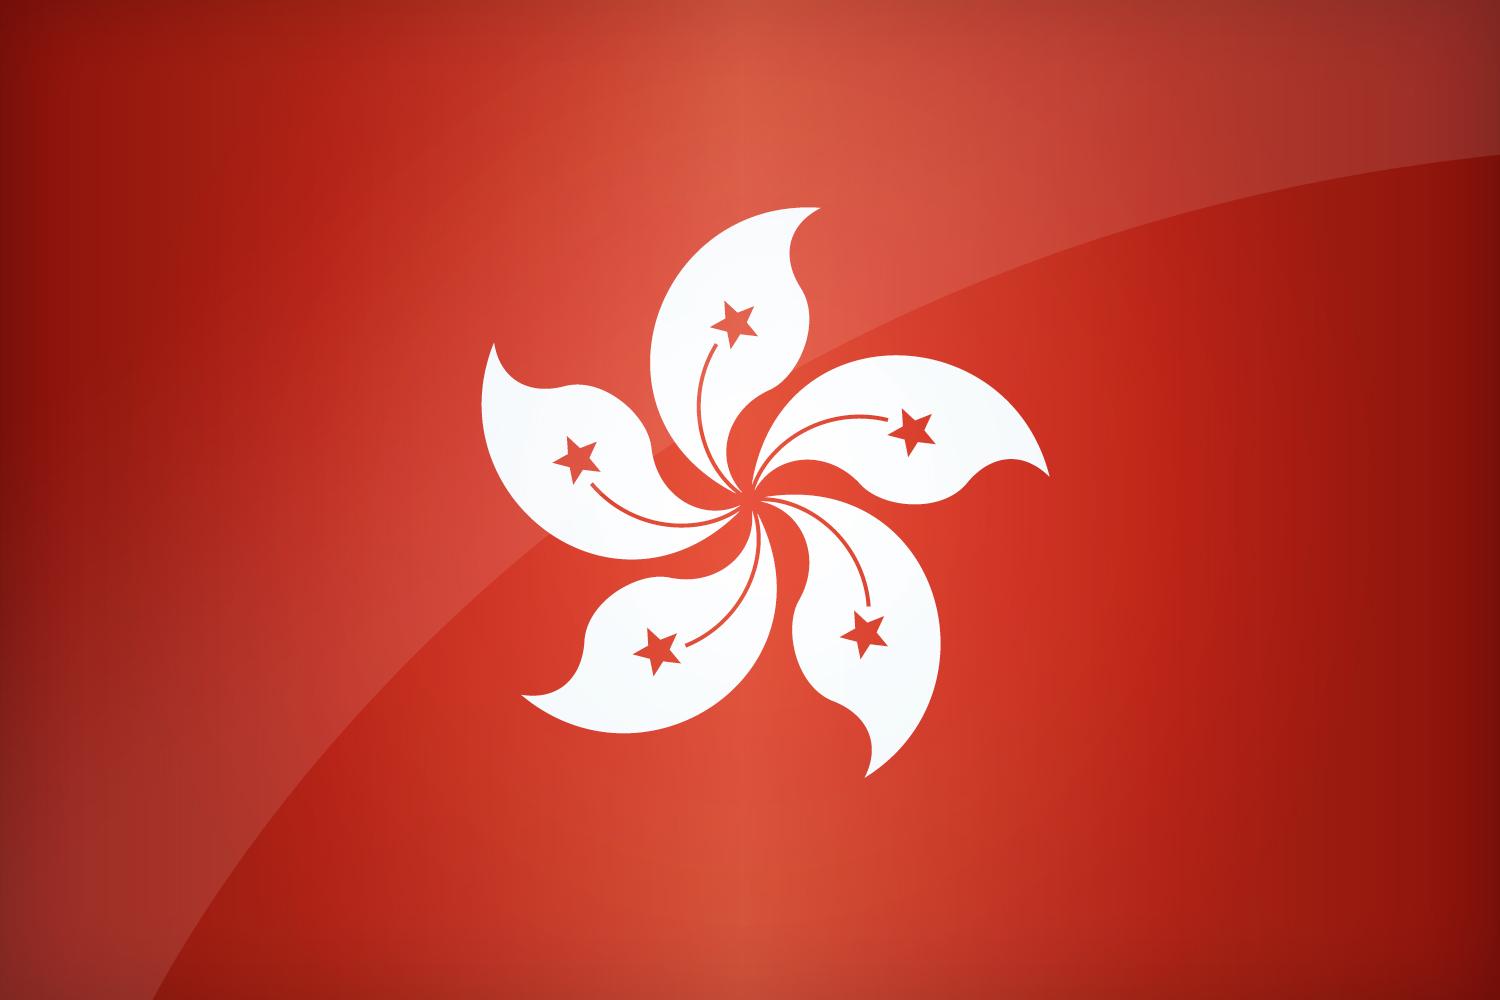 Flag of Hong Kong. Find the best design for Hong Konger Flag